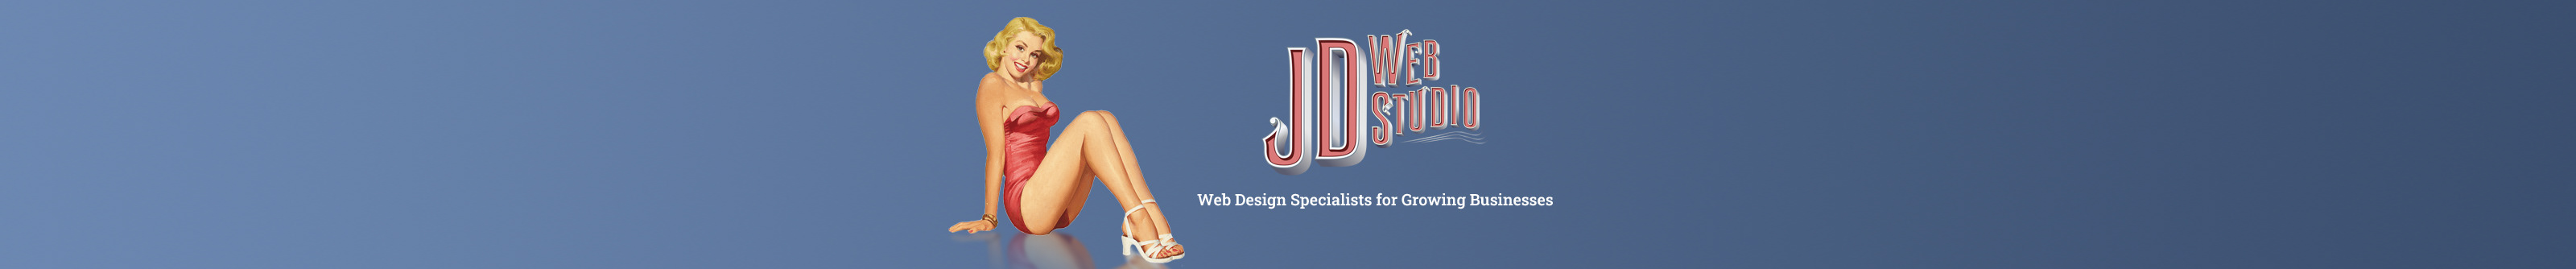 JD Web Studio's profile banner